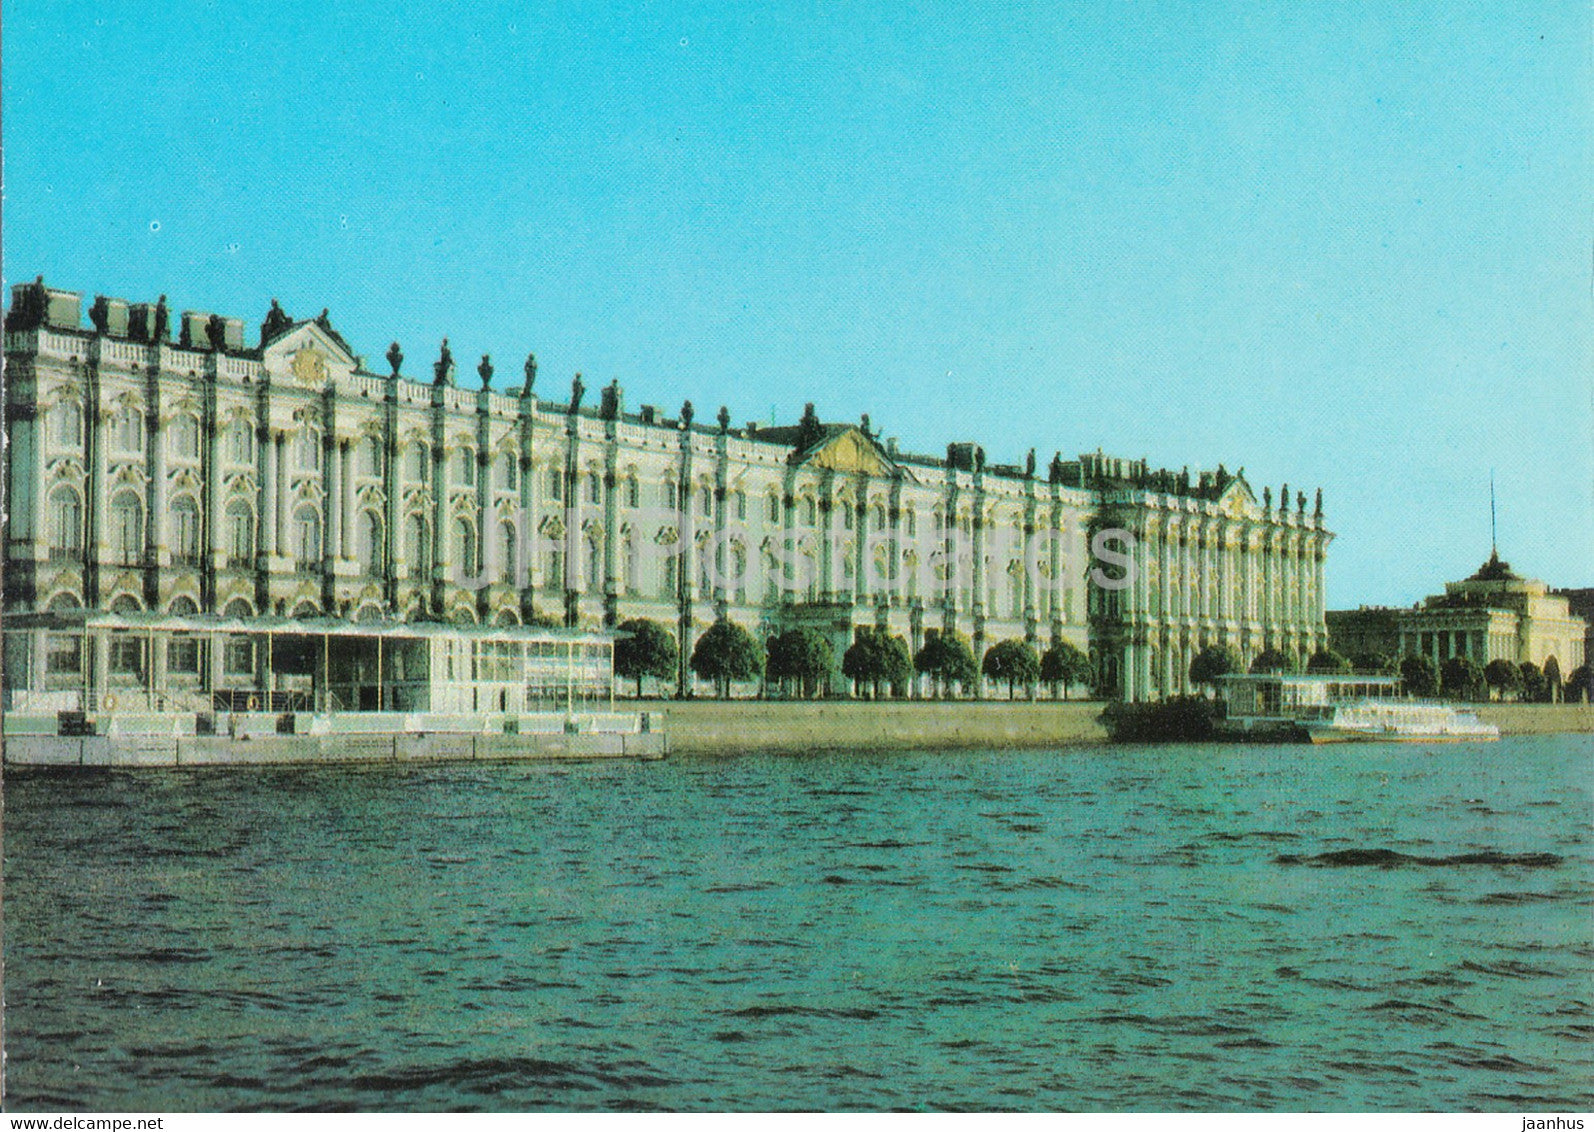 Leningrad - St Petersburg - Winter Palace - State Hermitage Museum - postal stationery - 1990 - Russia USSR - unused - JH Postcards